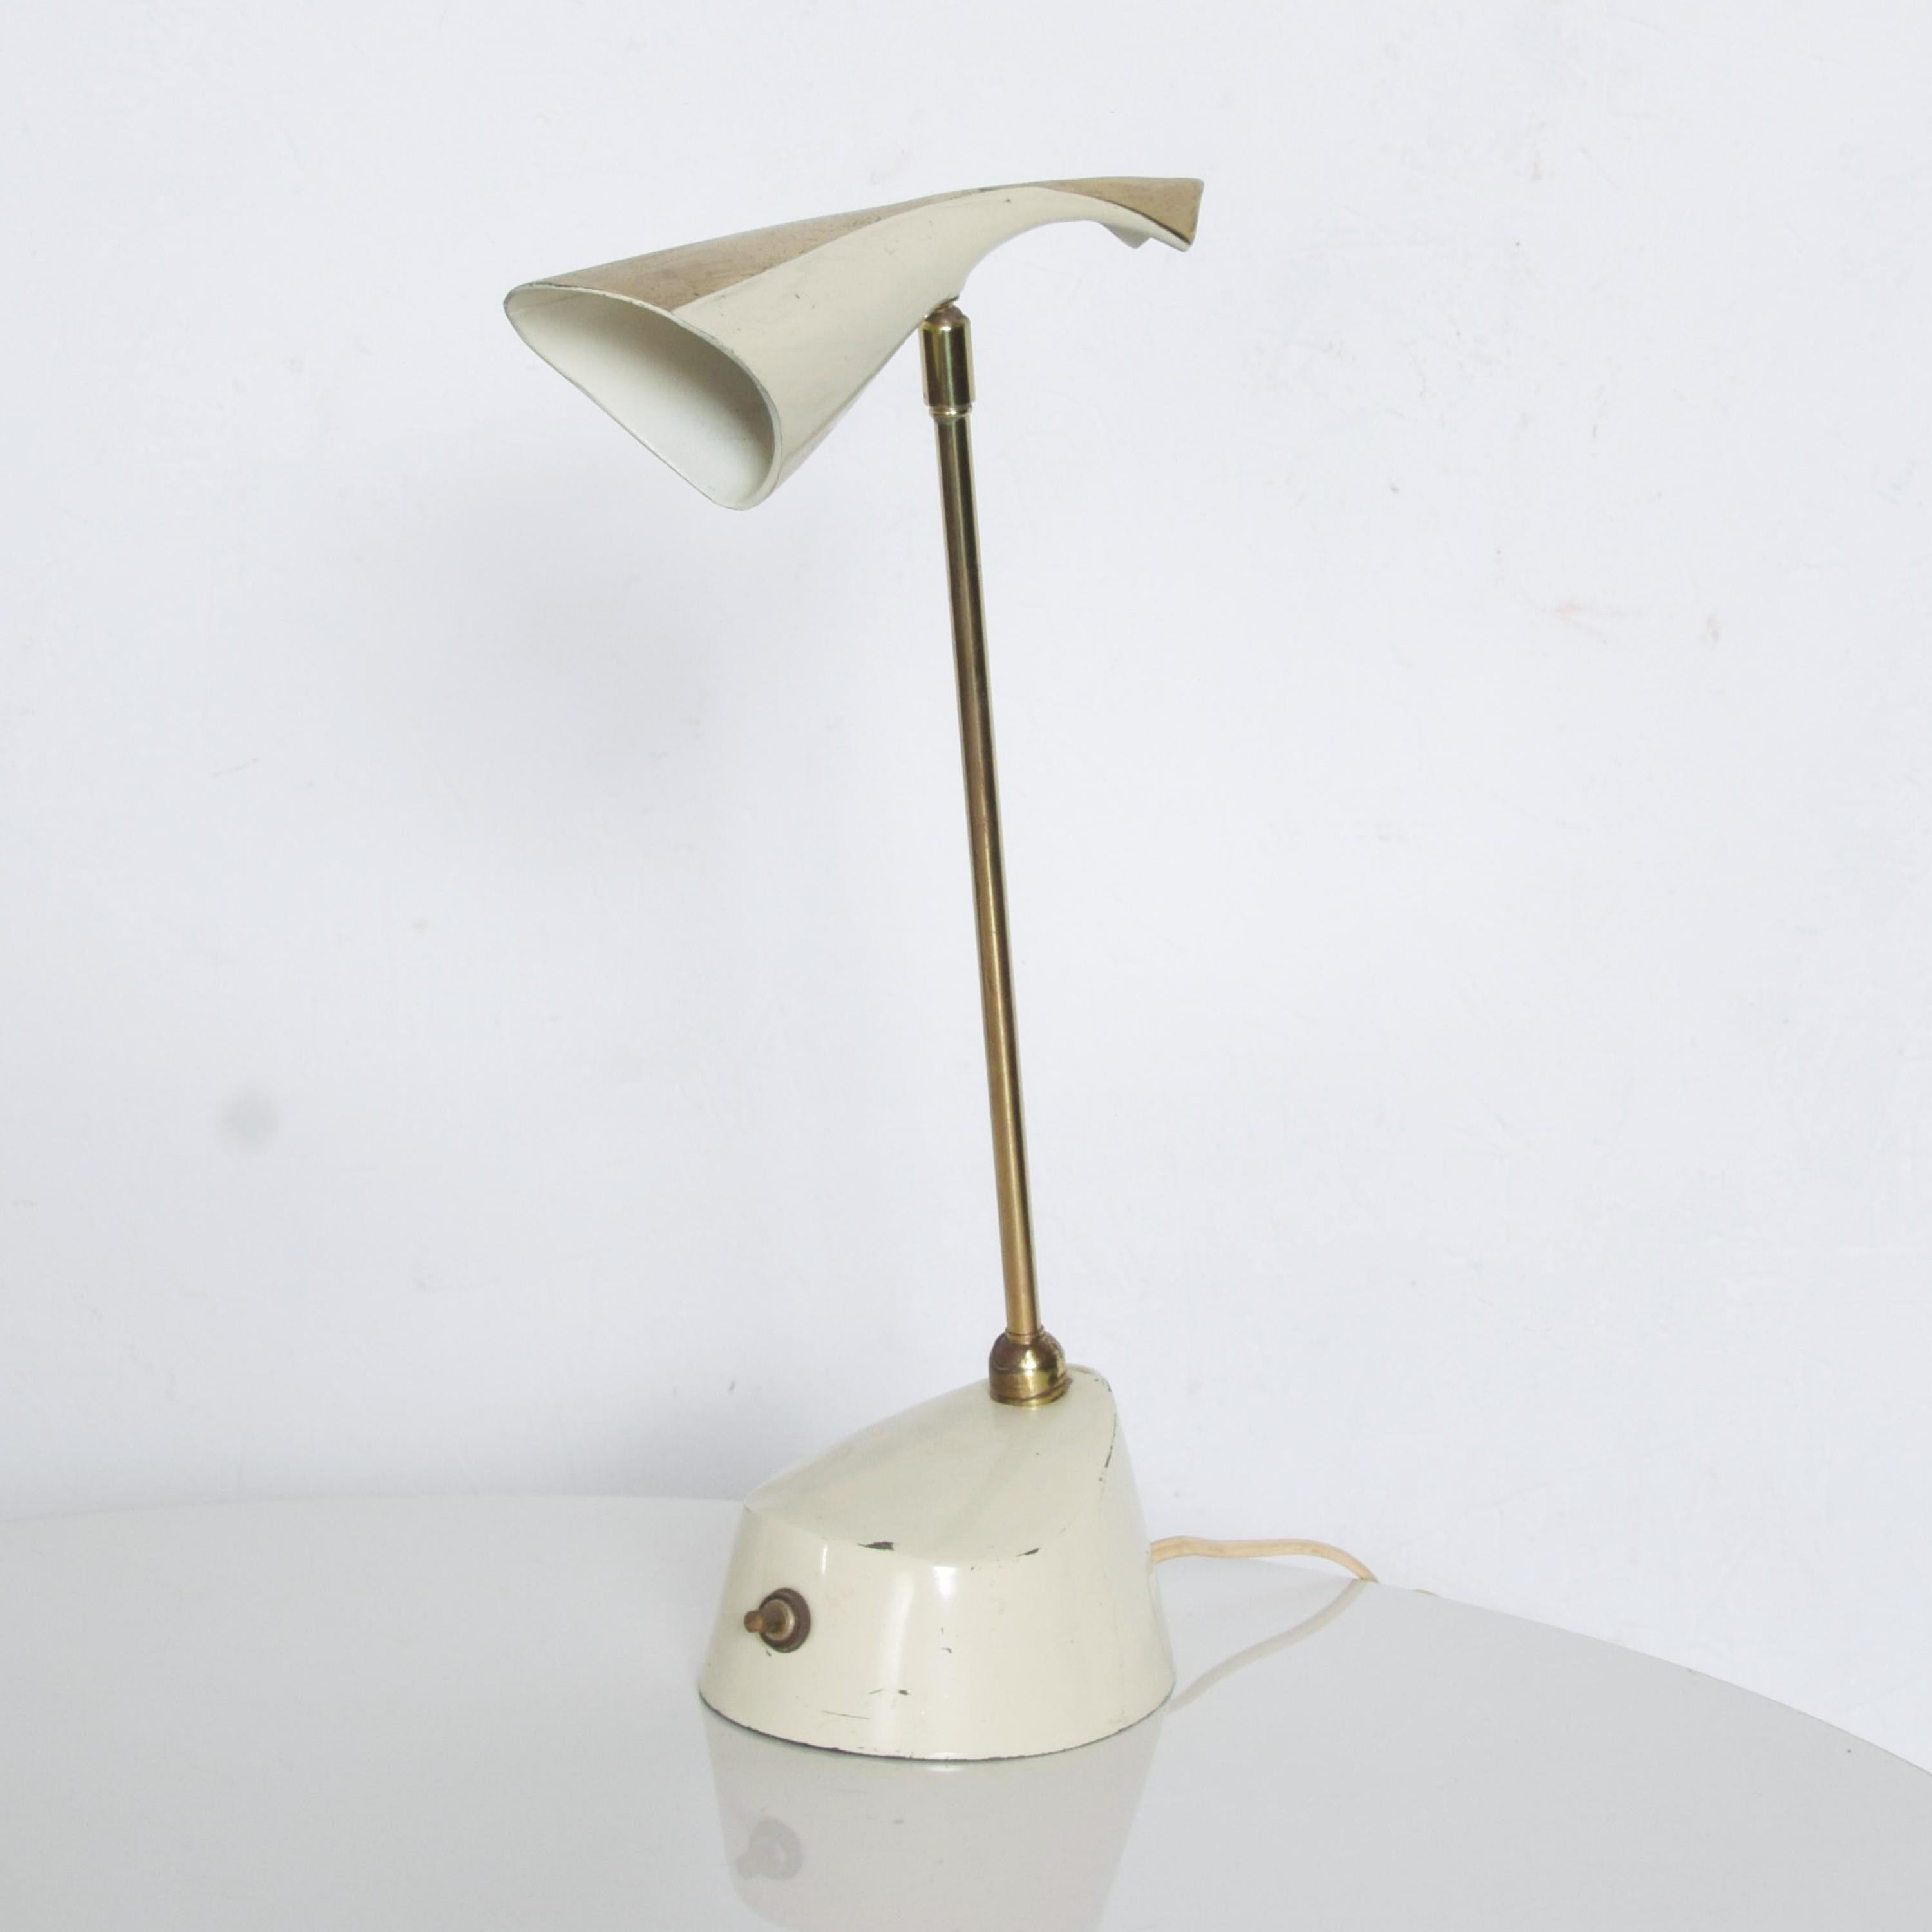 Laurel desk task lamp Classic sculptural cone Mid-Century Modern design

Modern flair metal laurel brass desk task adjustable pivot lamp, 1950s

Measures: 13.5